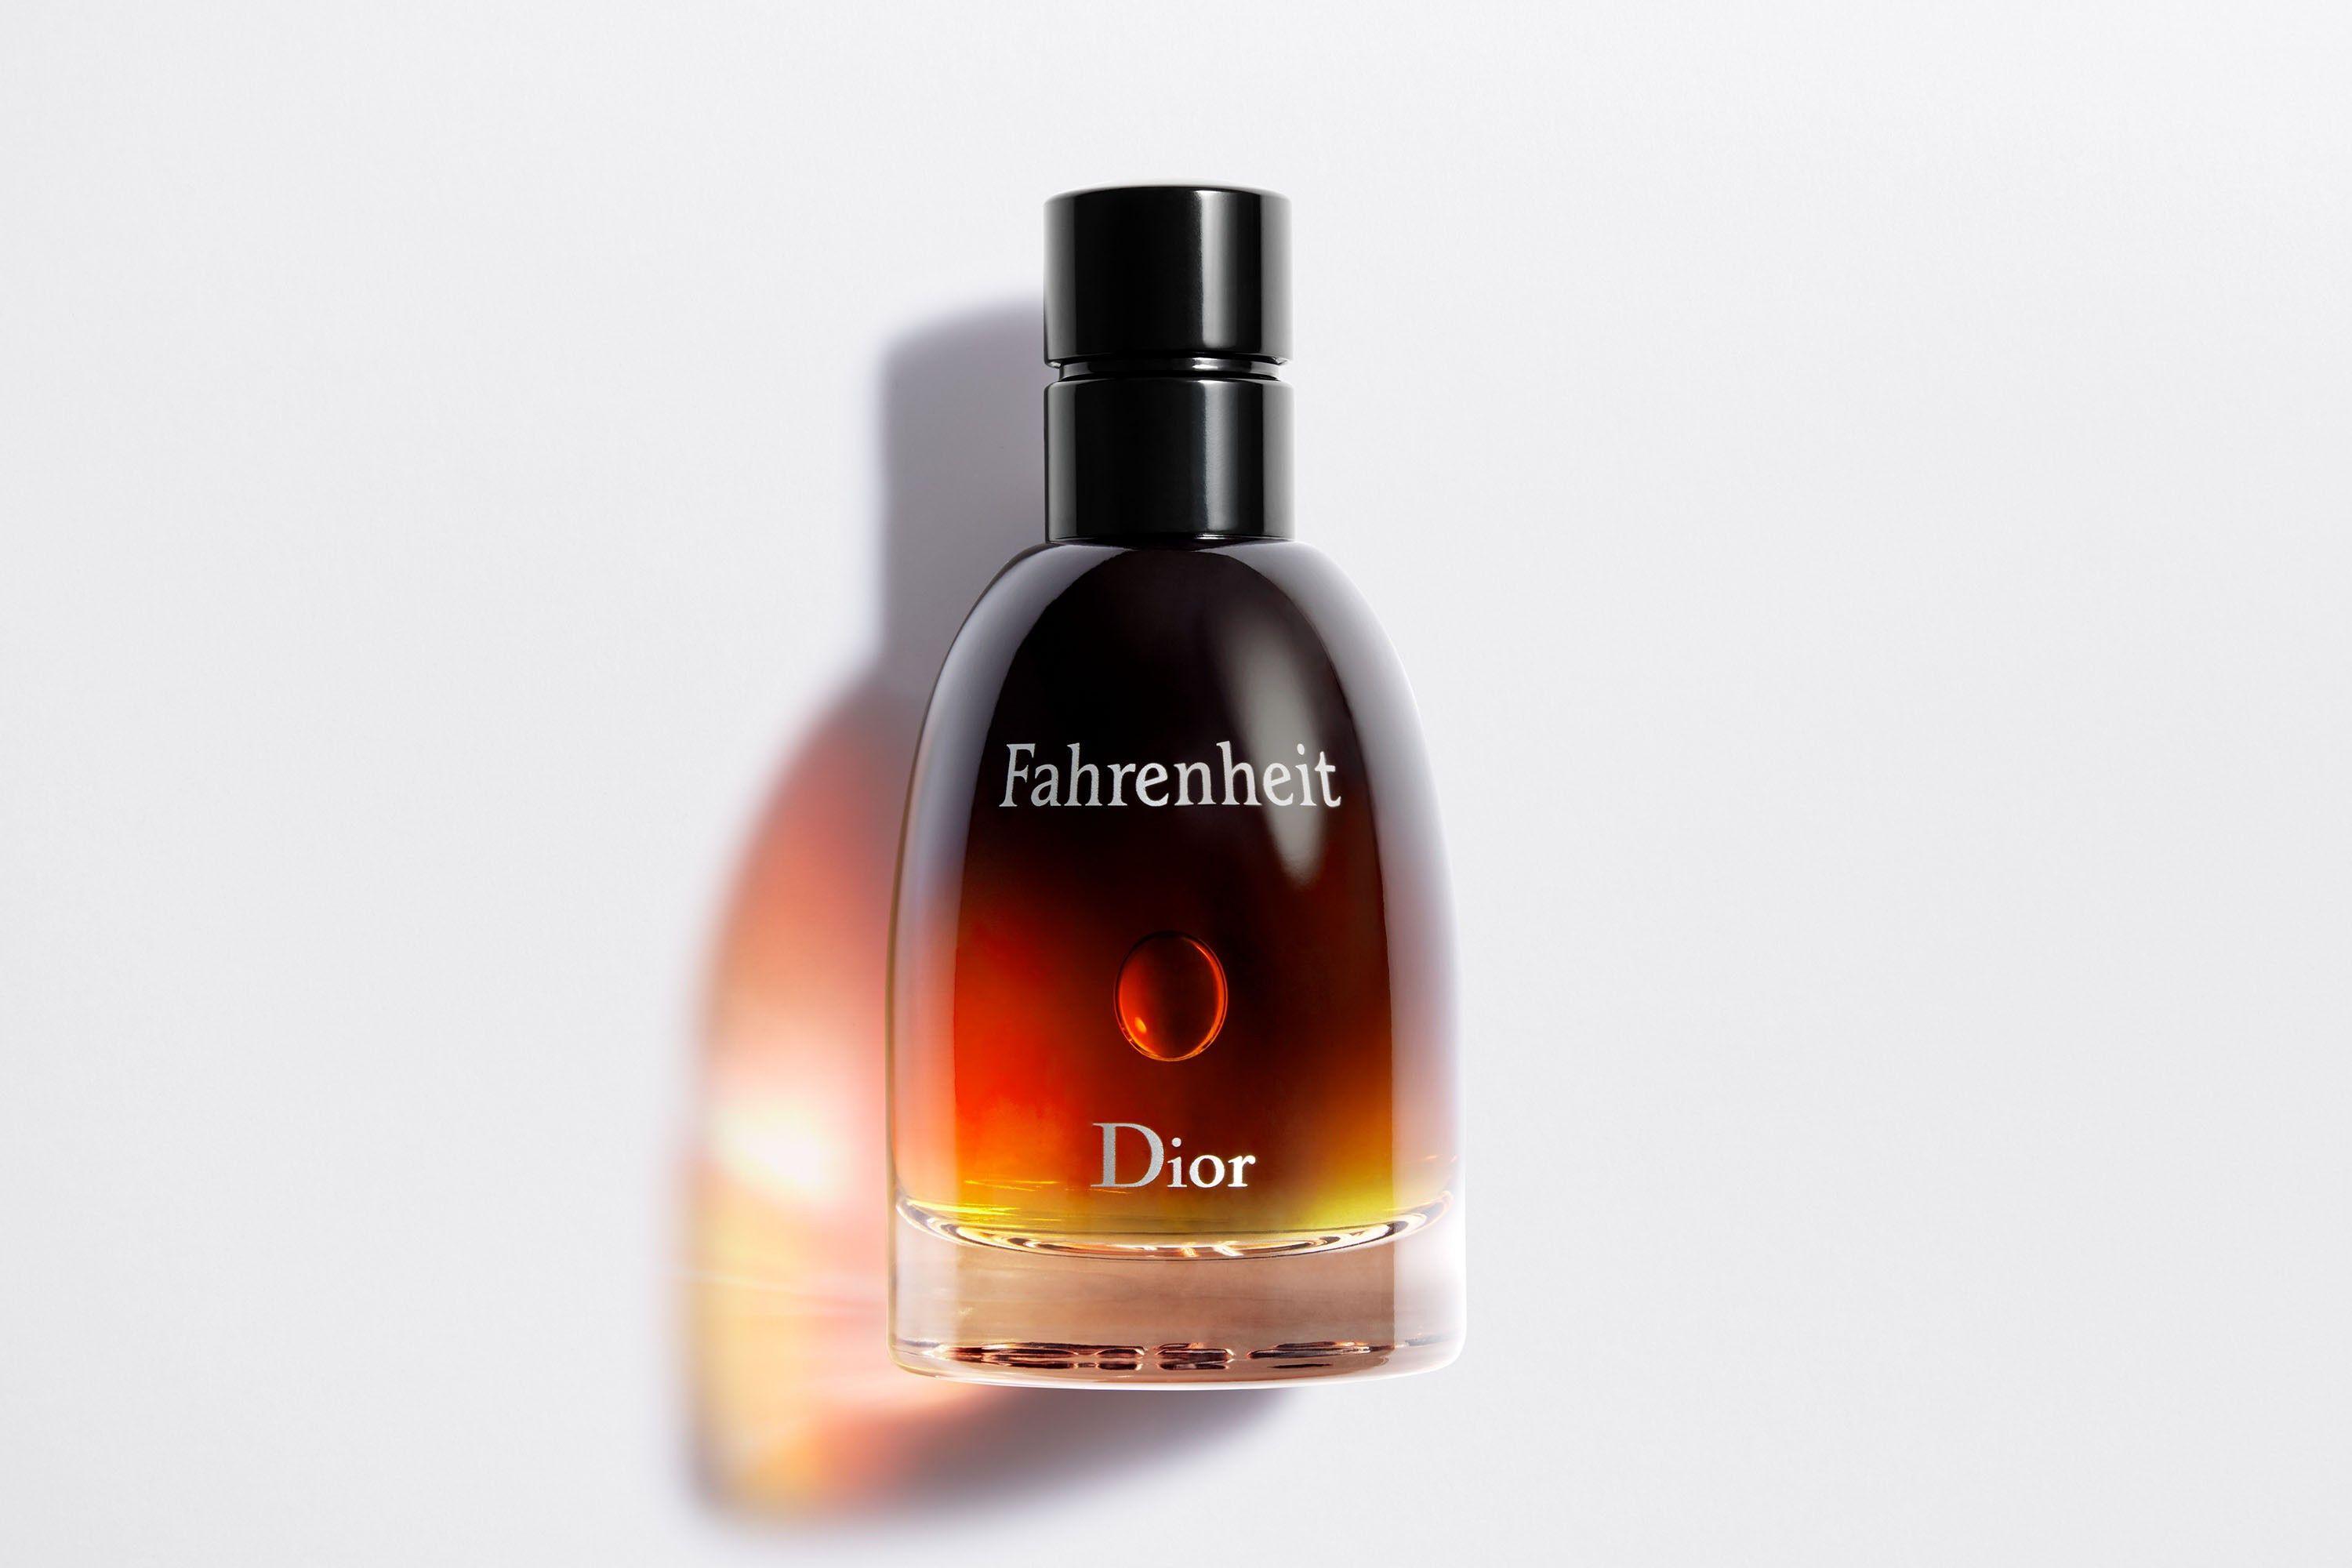 Fahrenheit - Parfum Gallerie